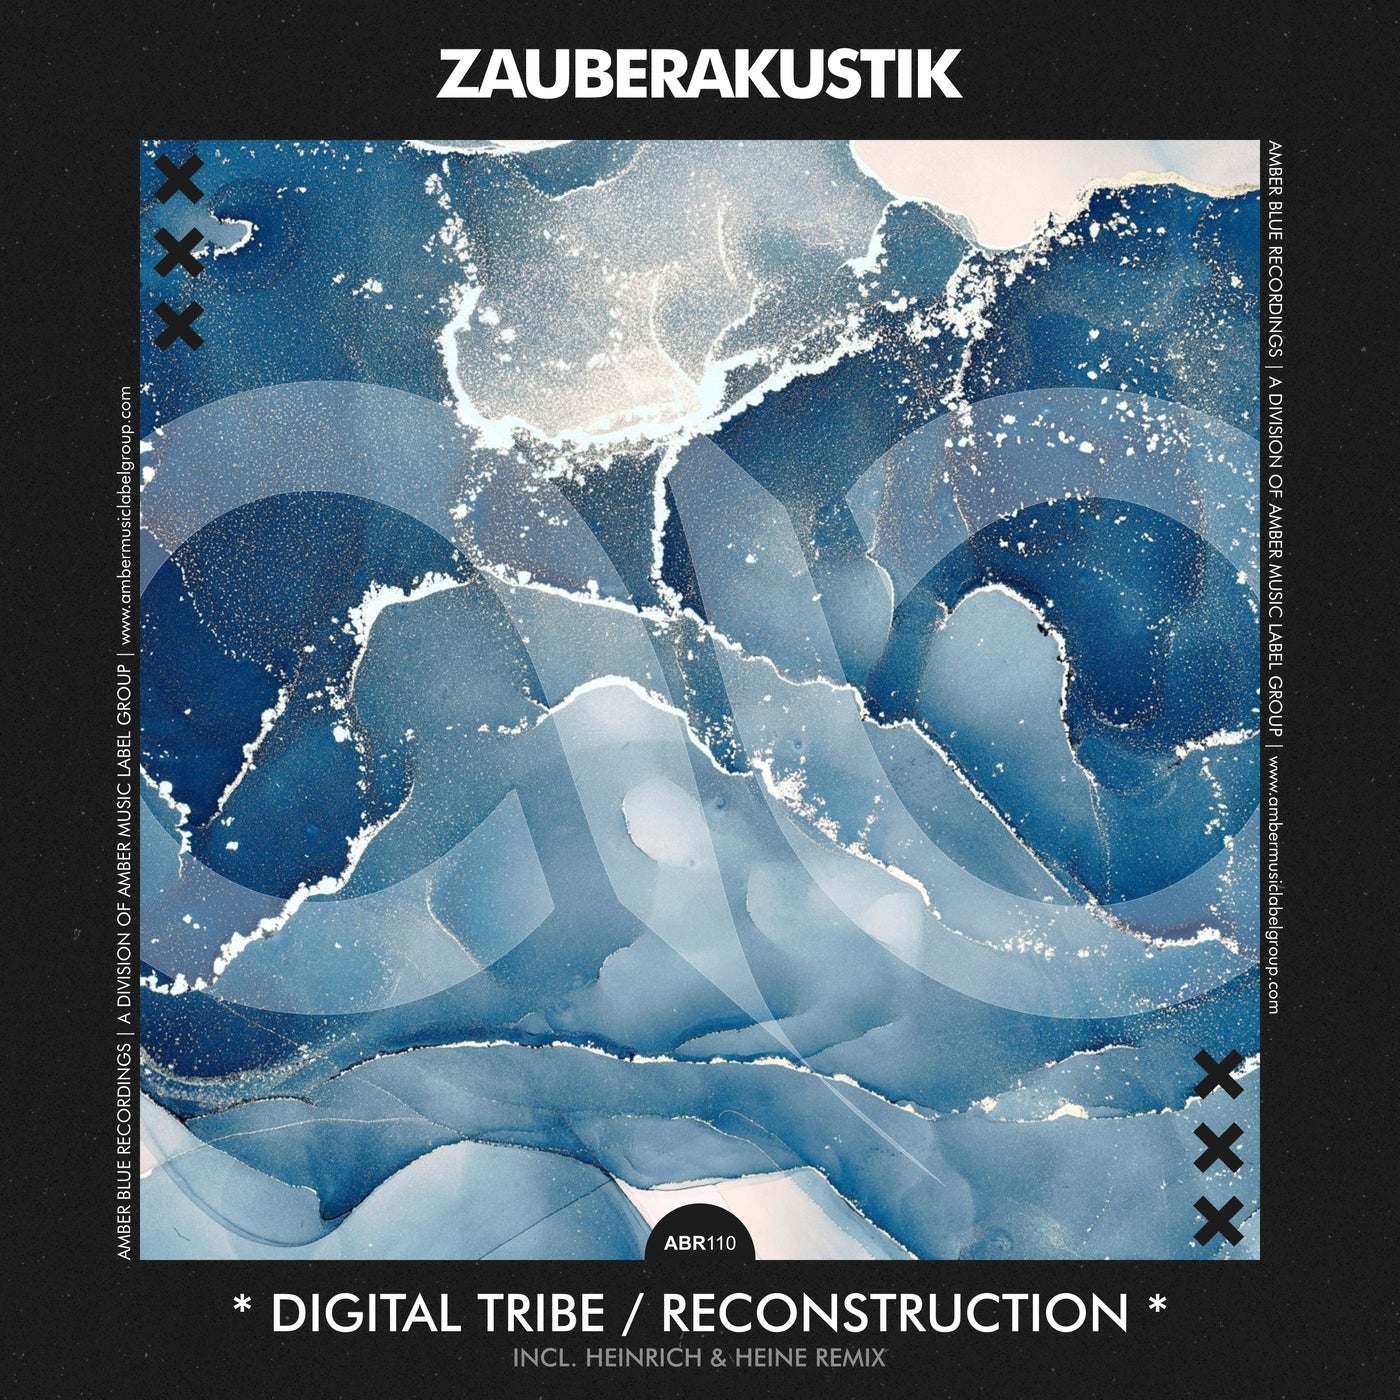 Digital Tribe / Reconstruction